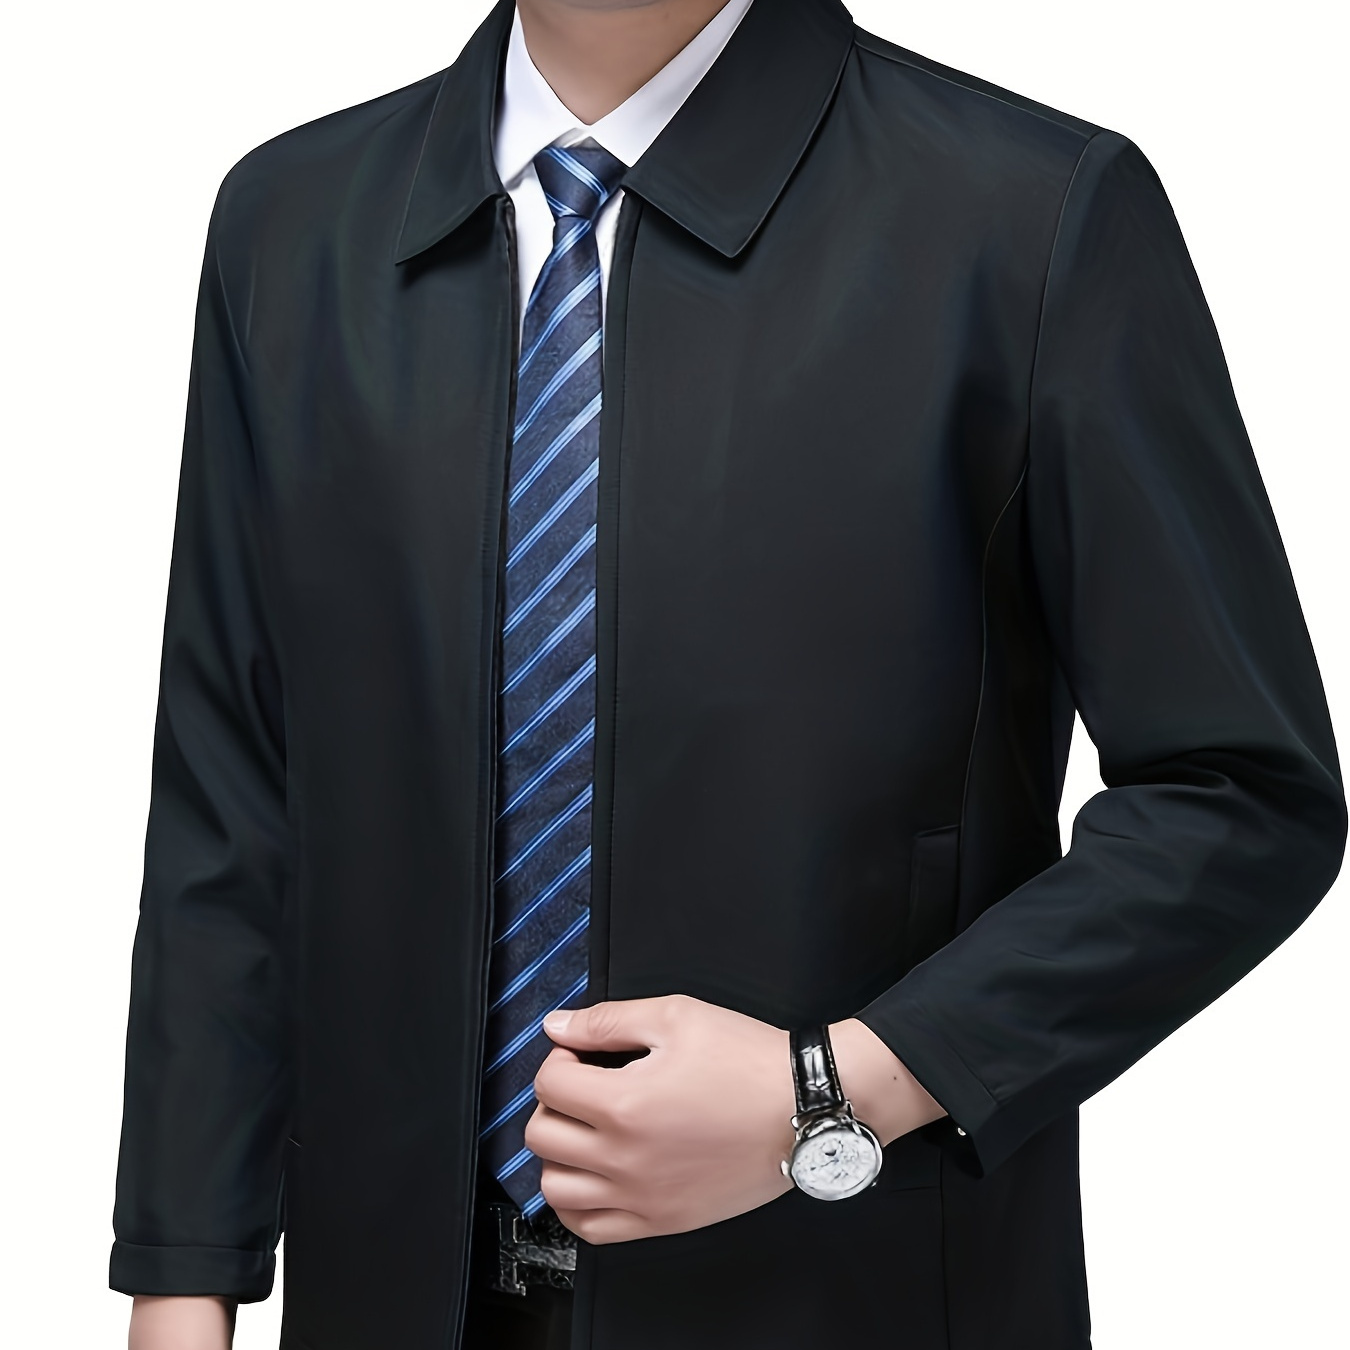 

Men's Semi-formal Jacket For Business Leisure Activities